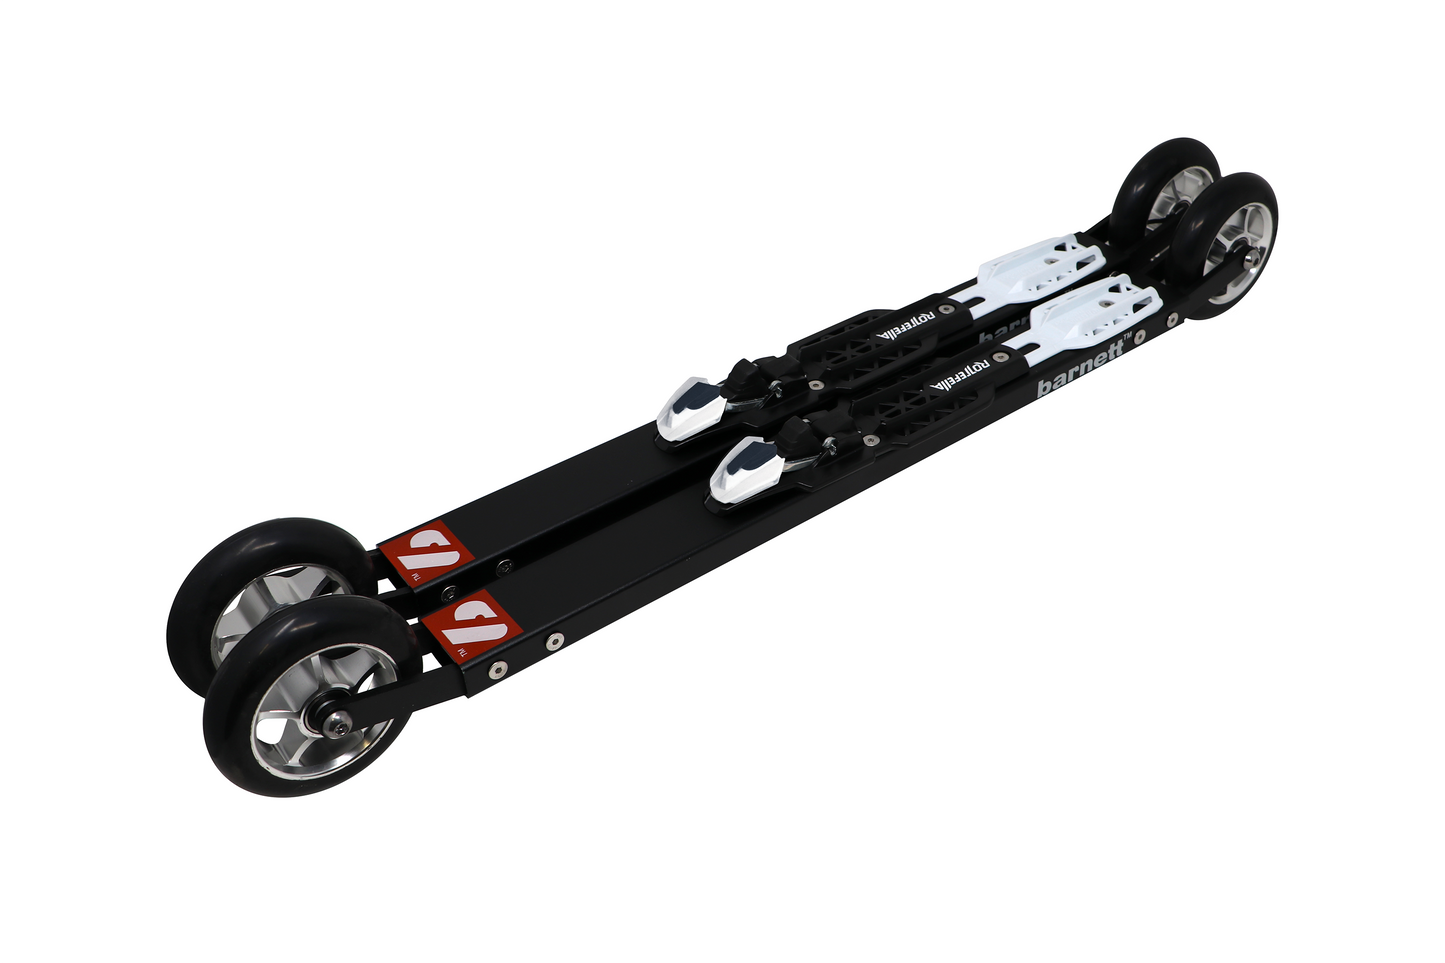 RSE-630 Binding NNN Roller ski, BLACK